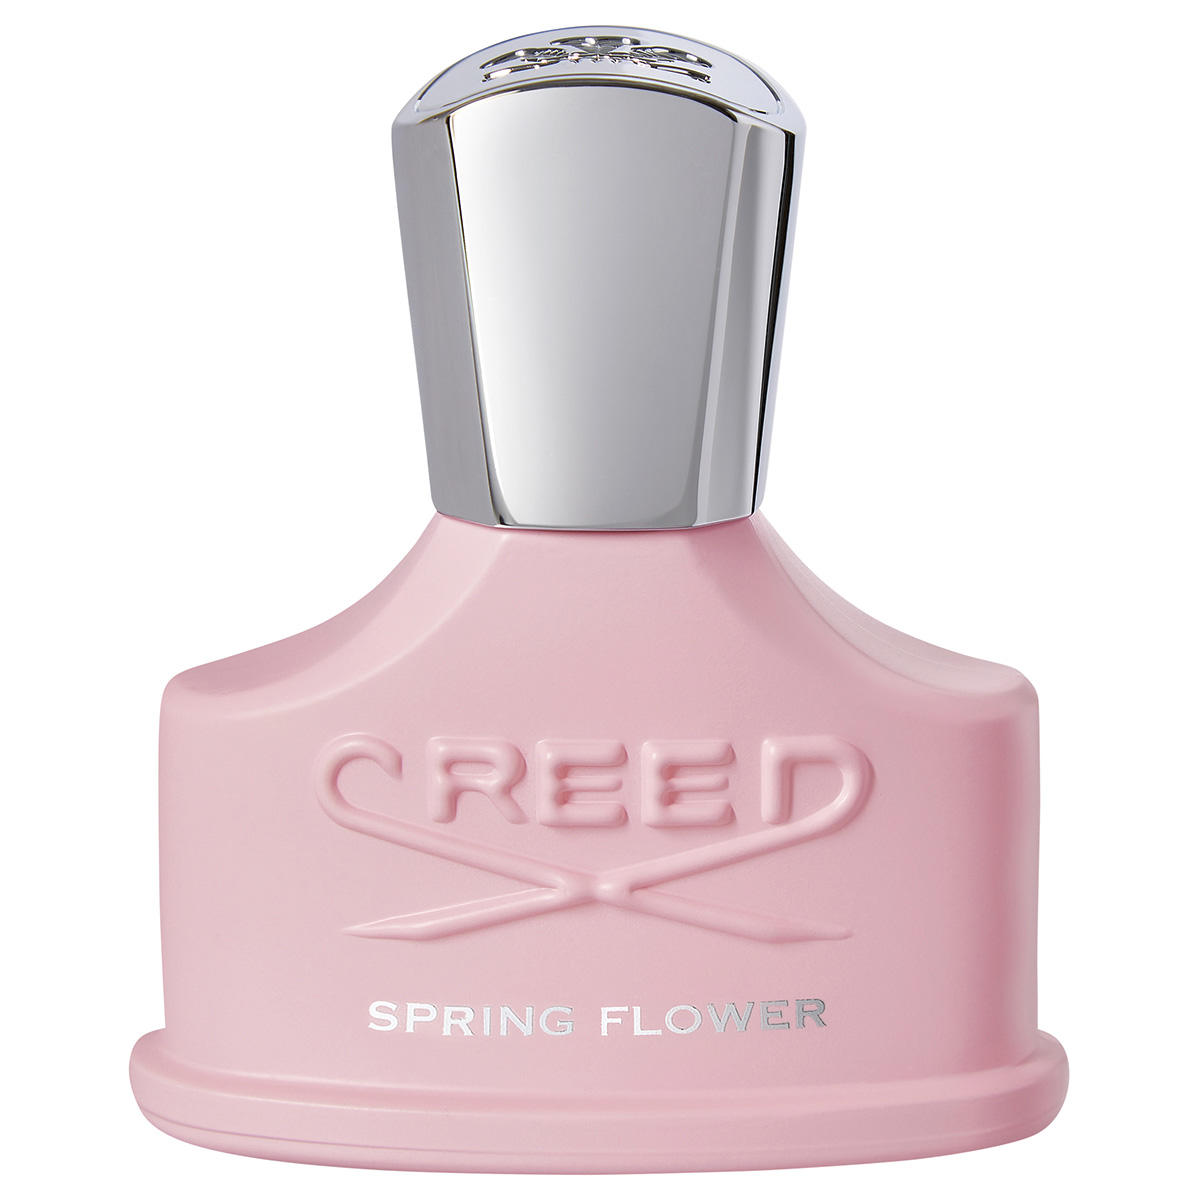 Creed Spring Flower Eau de Parfum  - 1